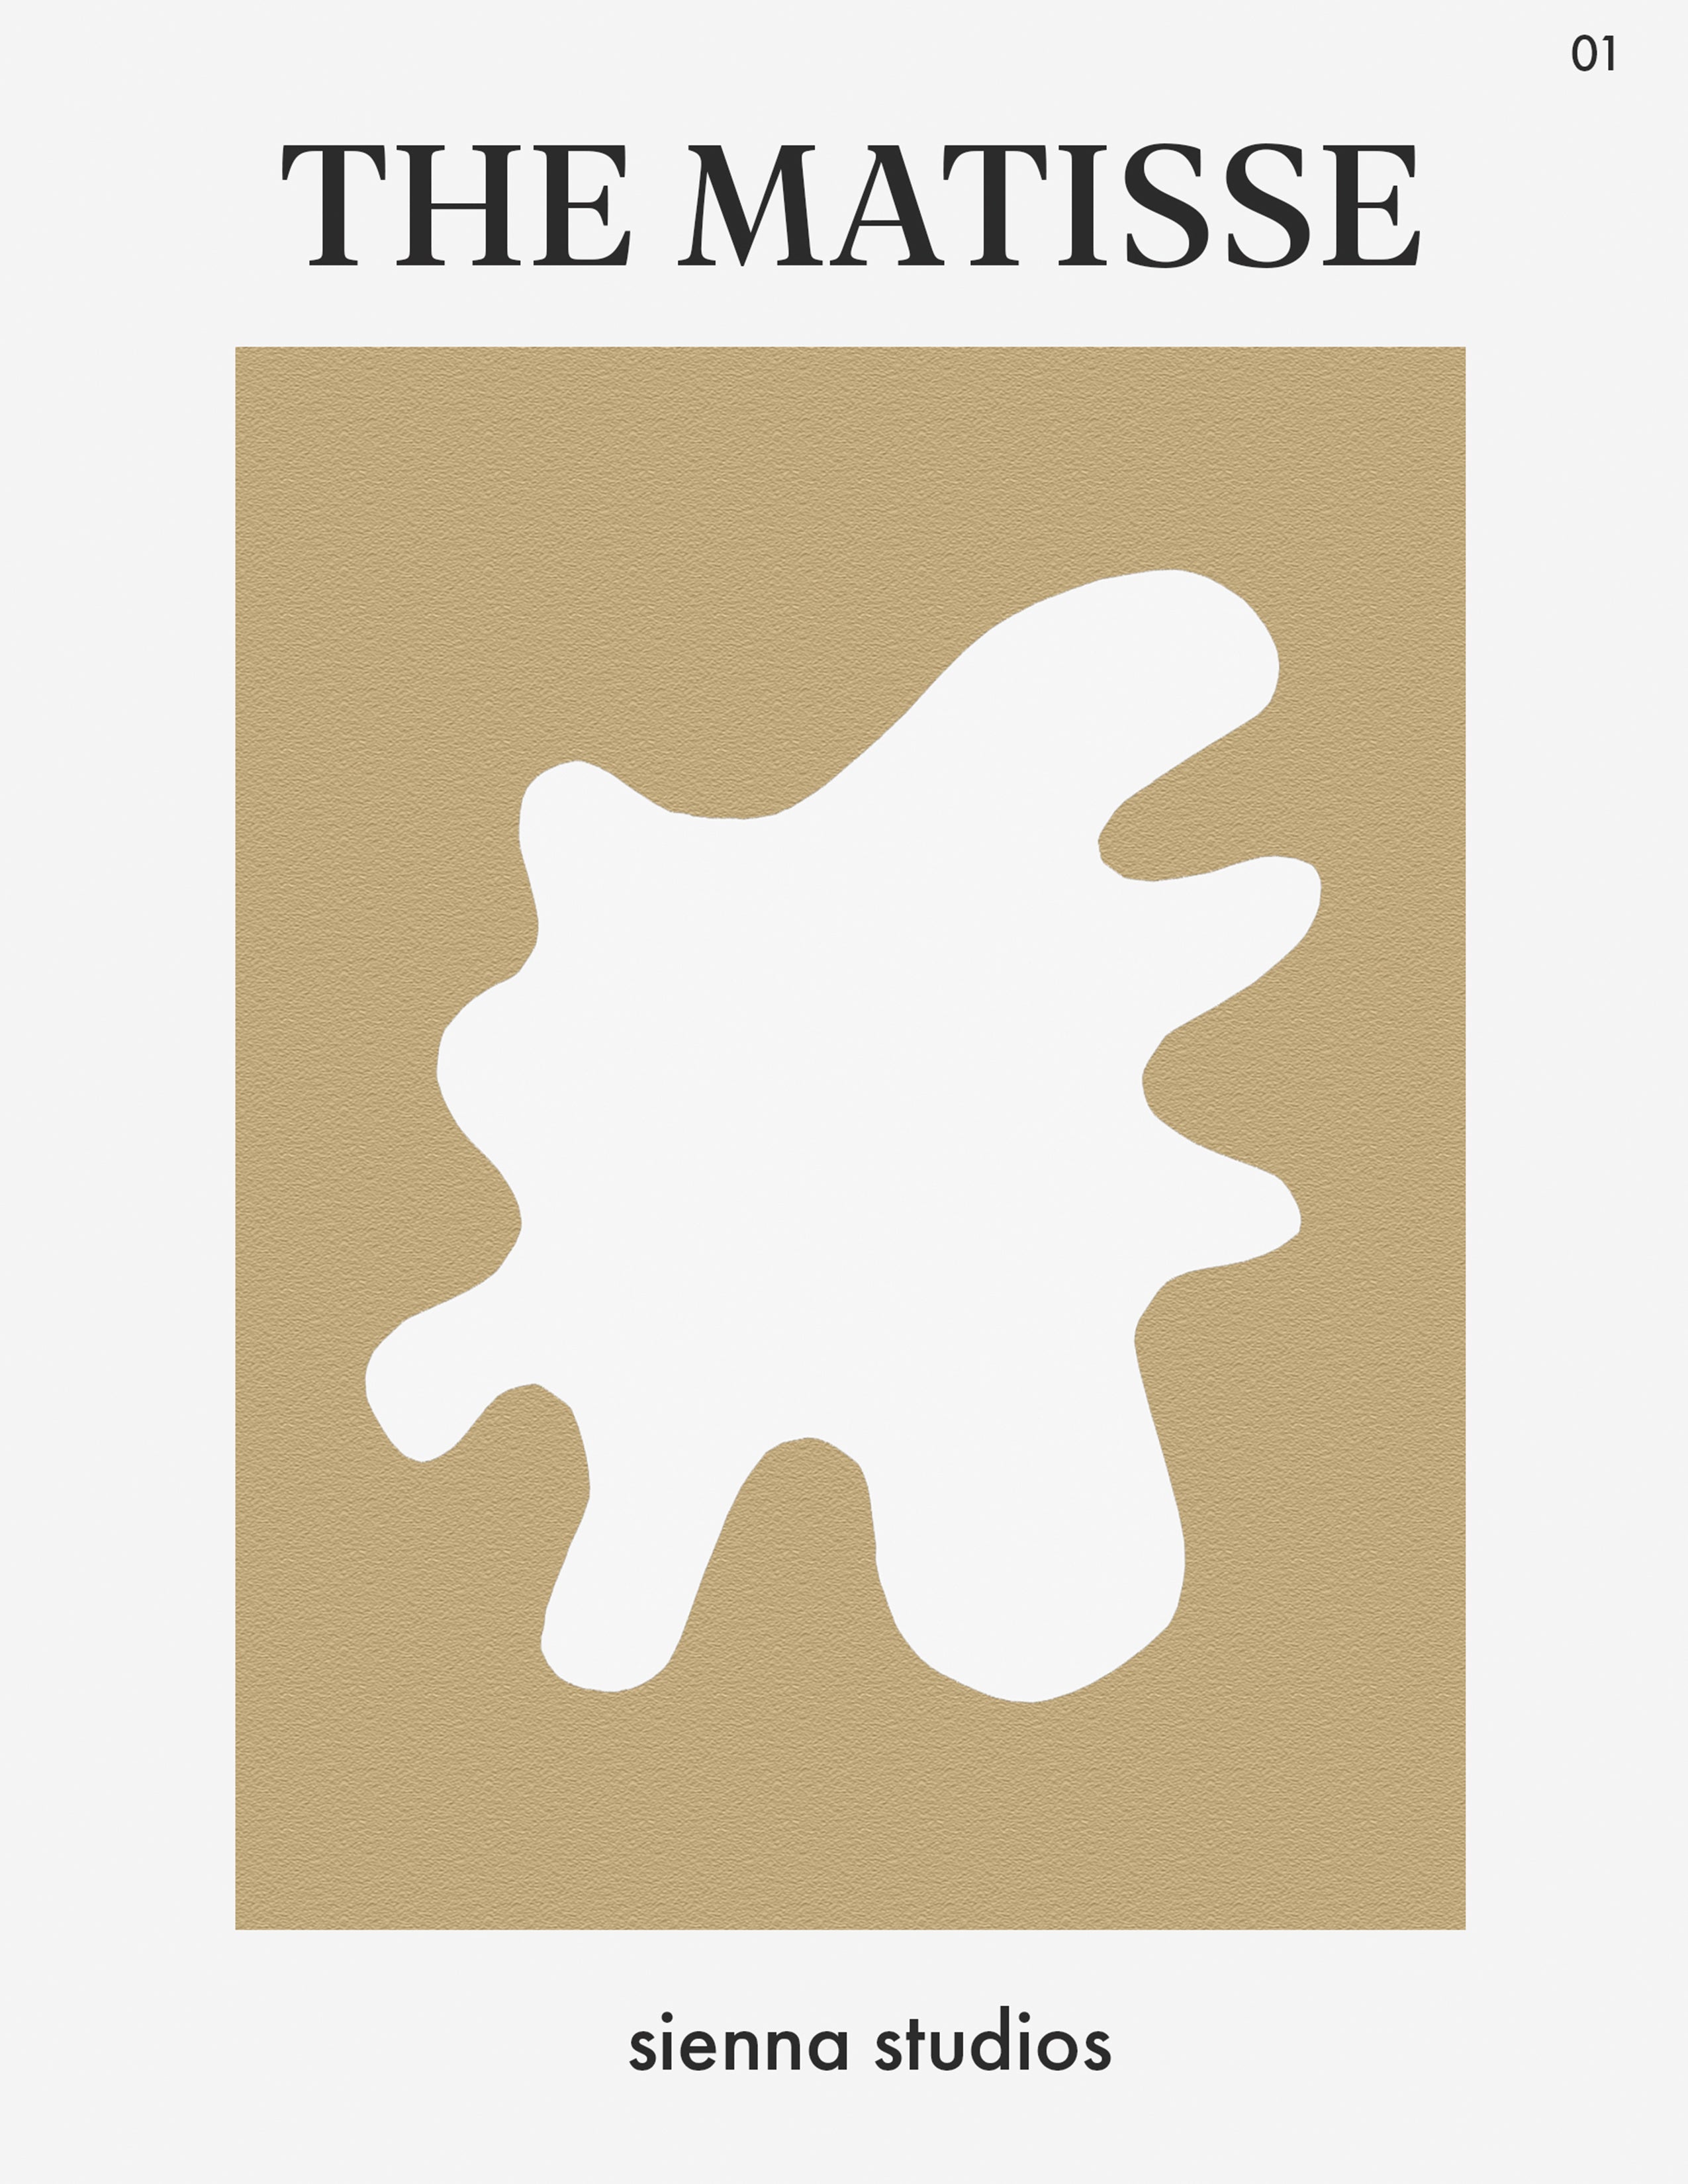 The Matisse Poster 01 (Digital Download)